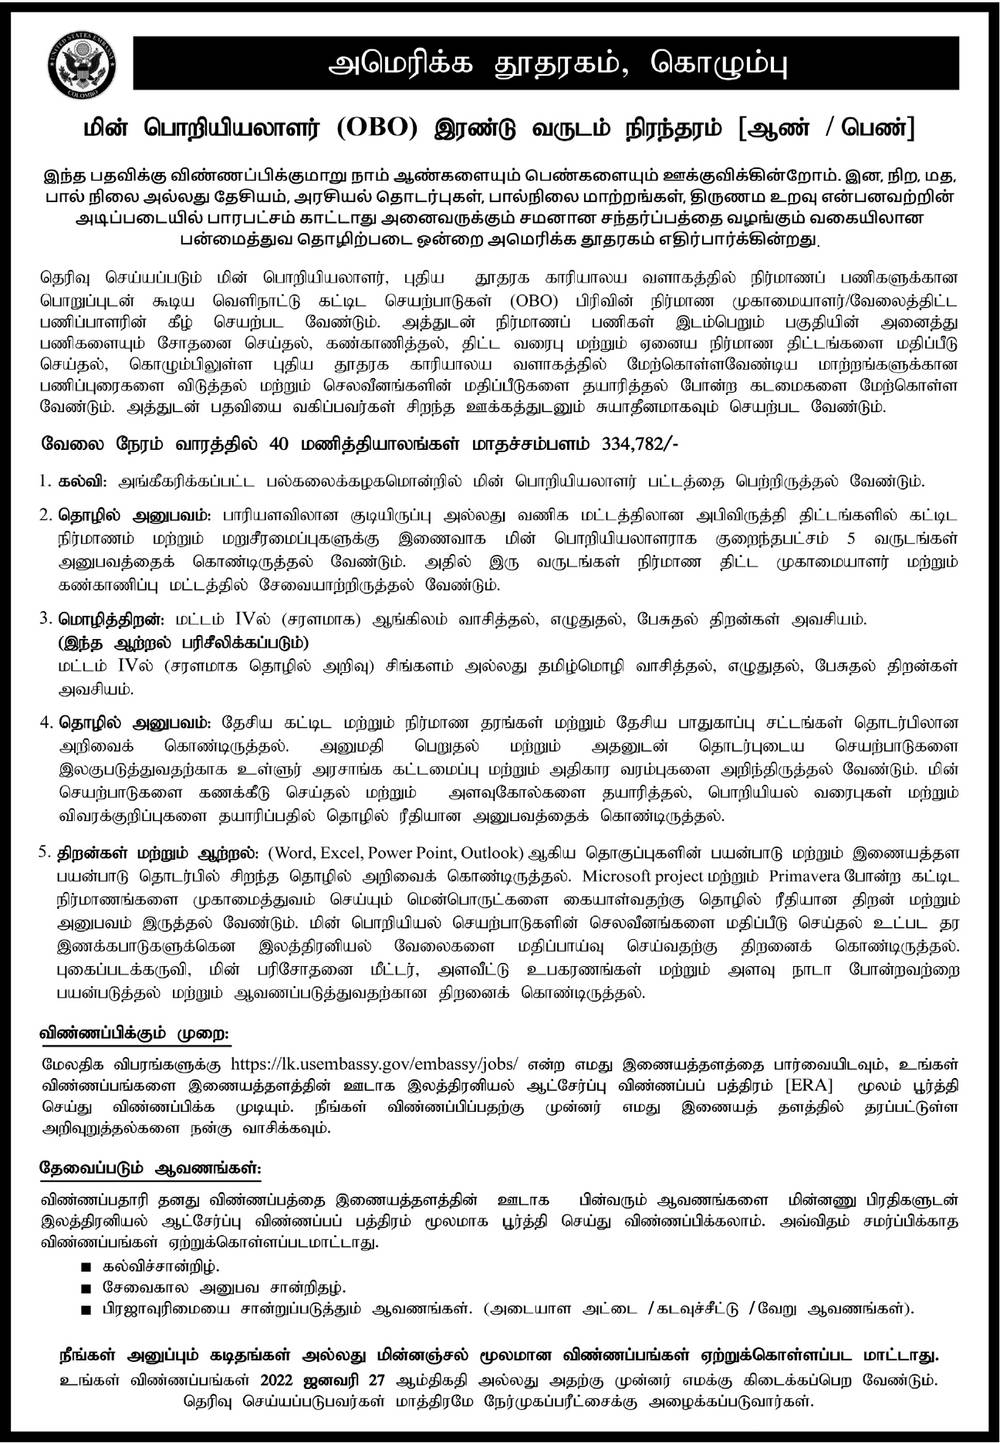 Electrical Engineer Job Vacancy in American Embassy Tamil